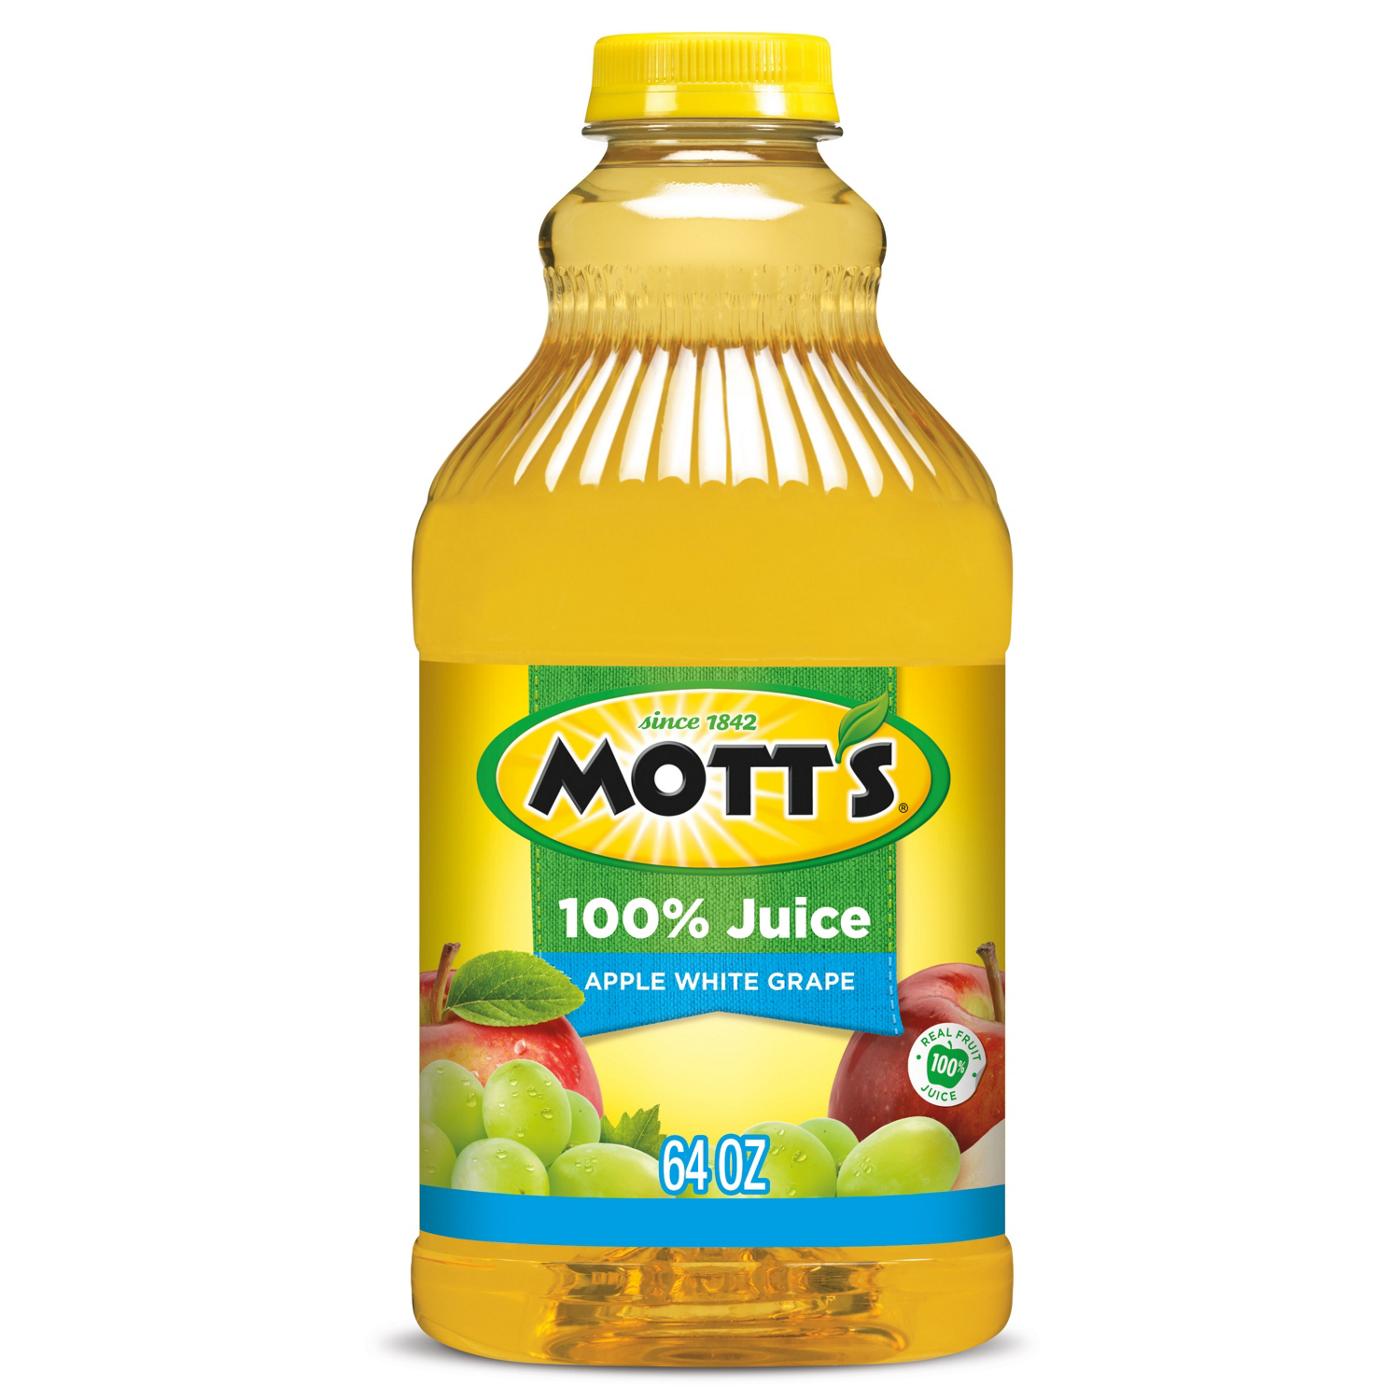 Mott's 100% Juice Apple White Grape; image 2 of 5